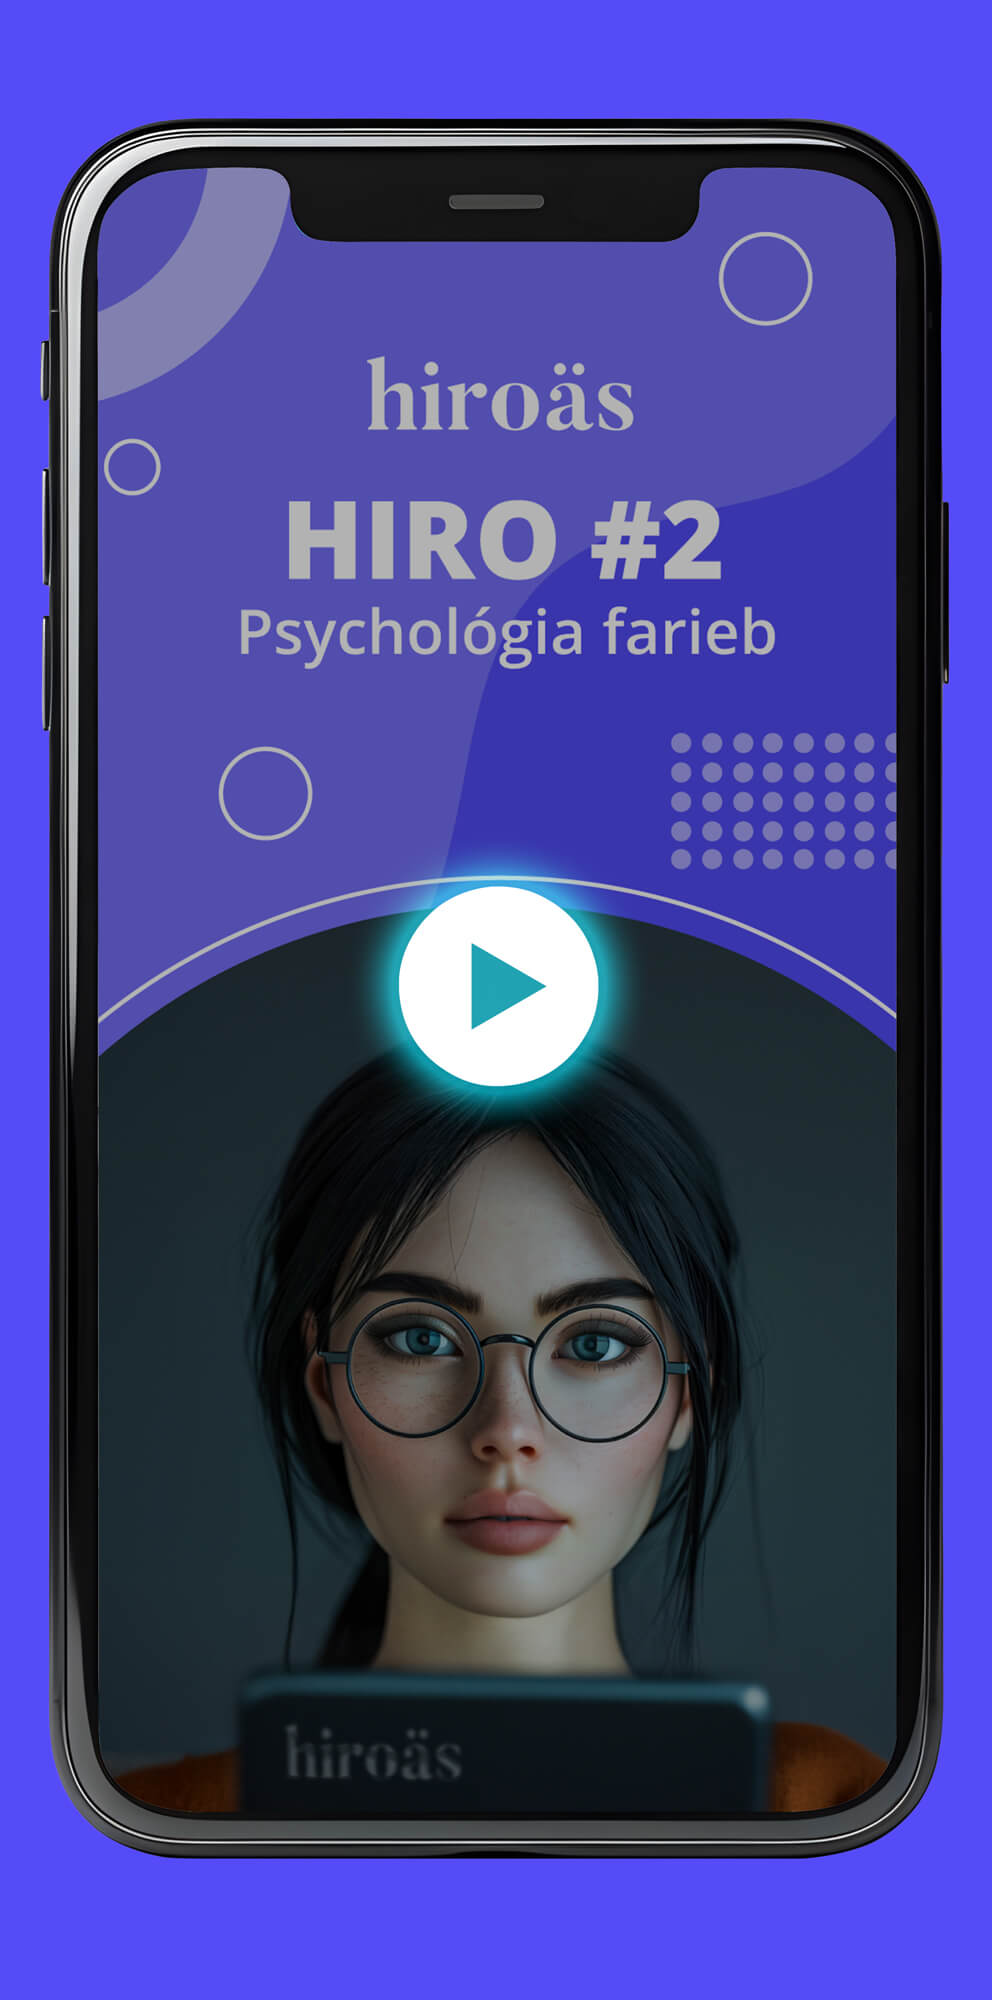 Hiro #2: Psychológia farieb